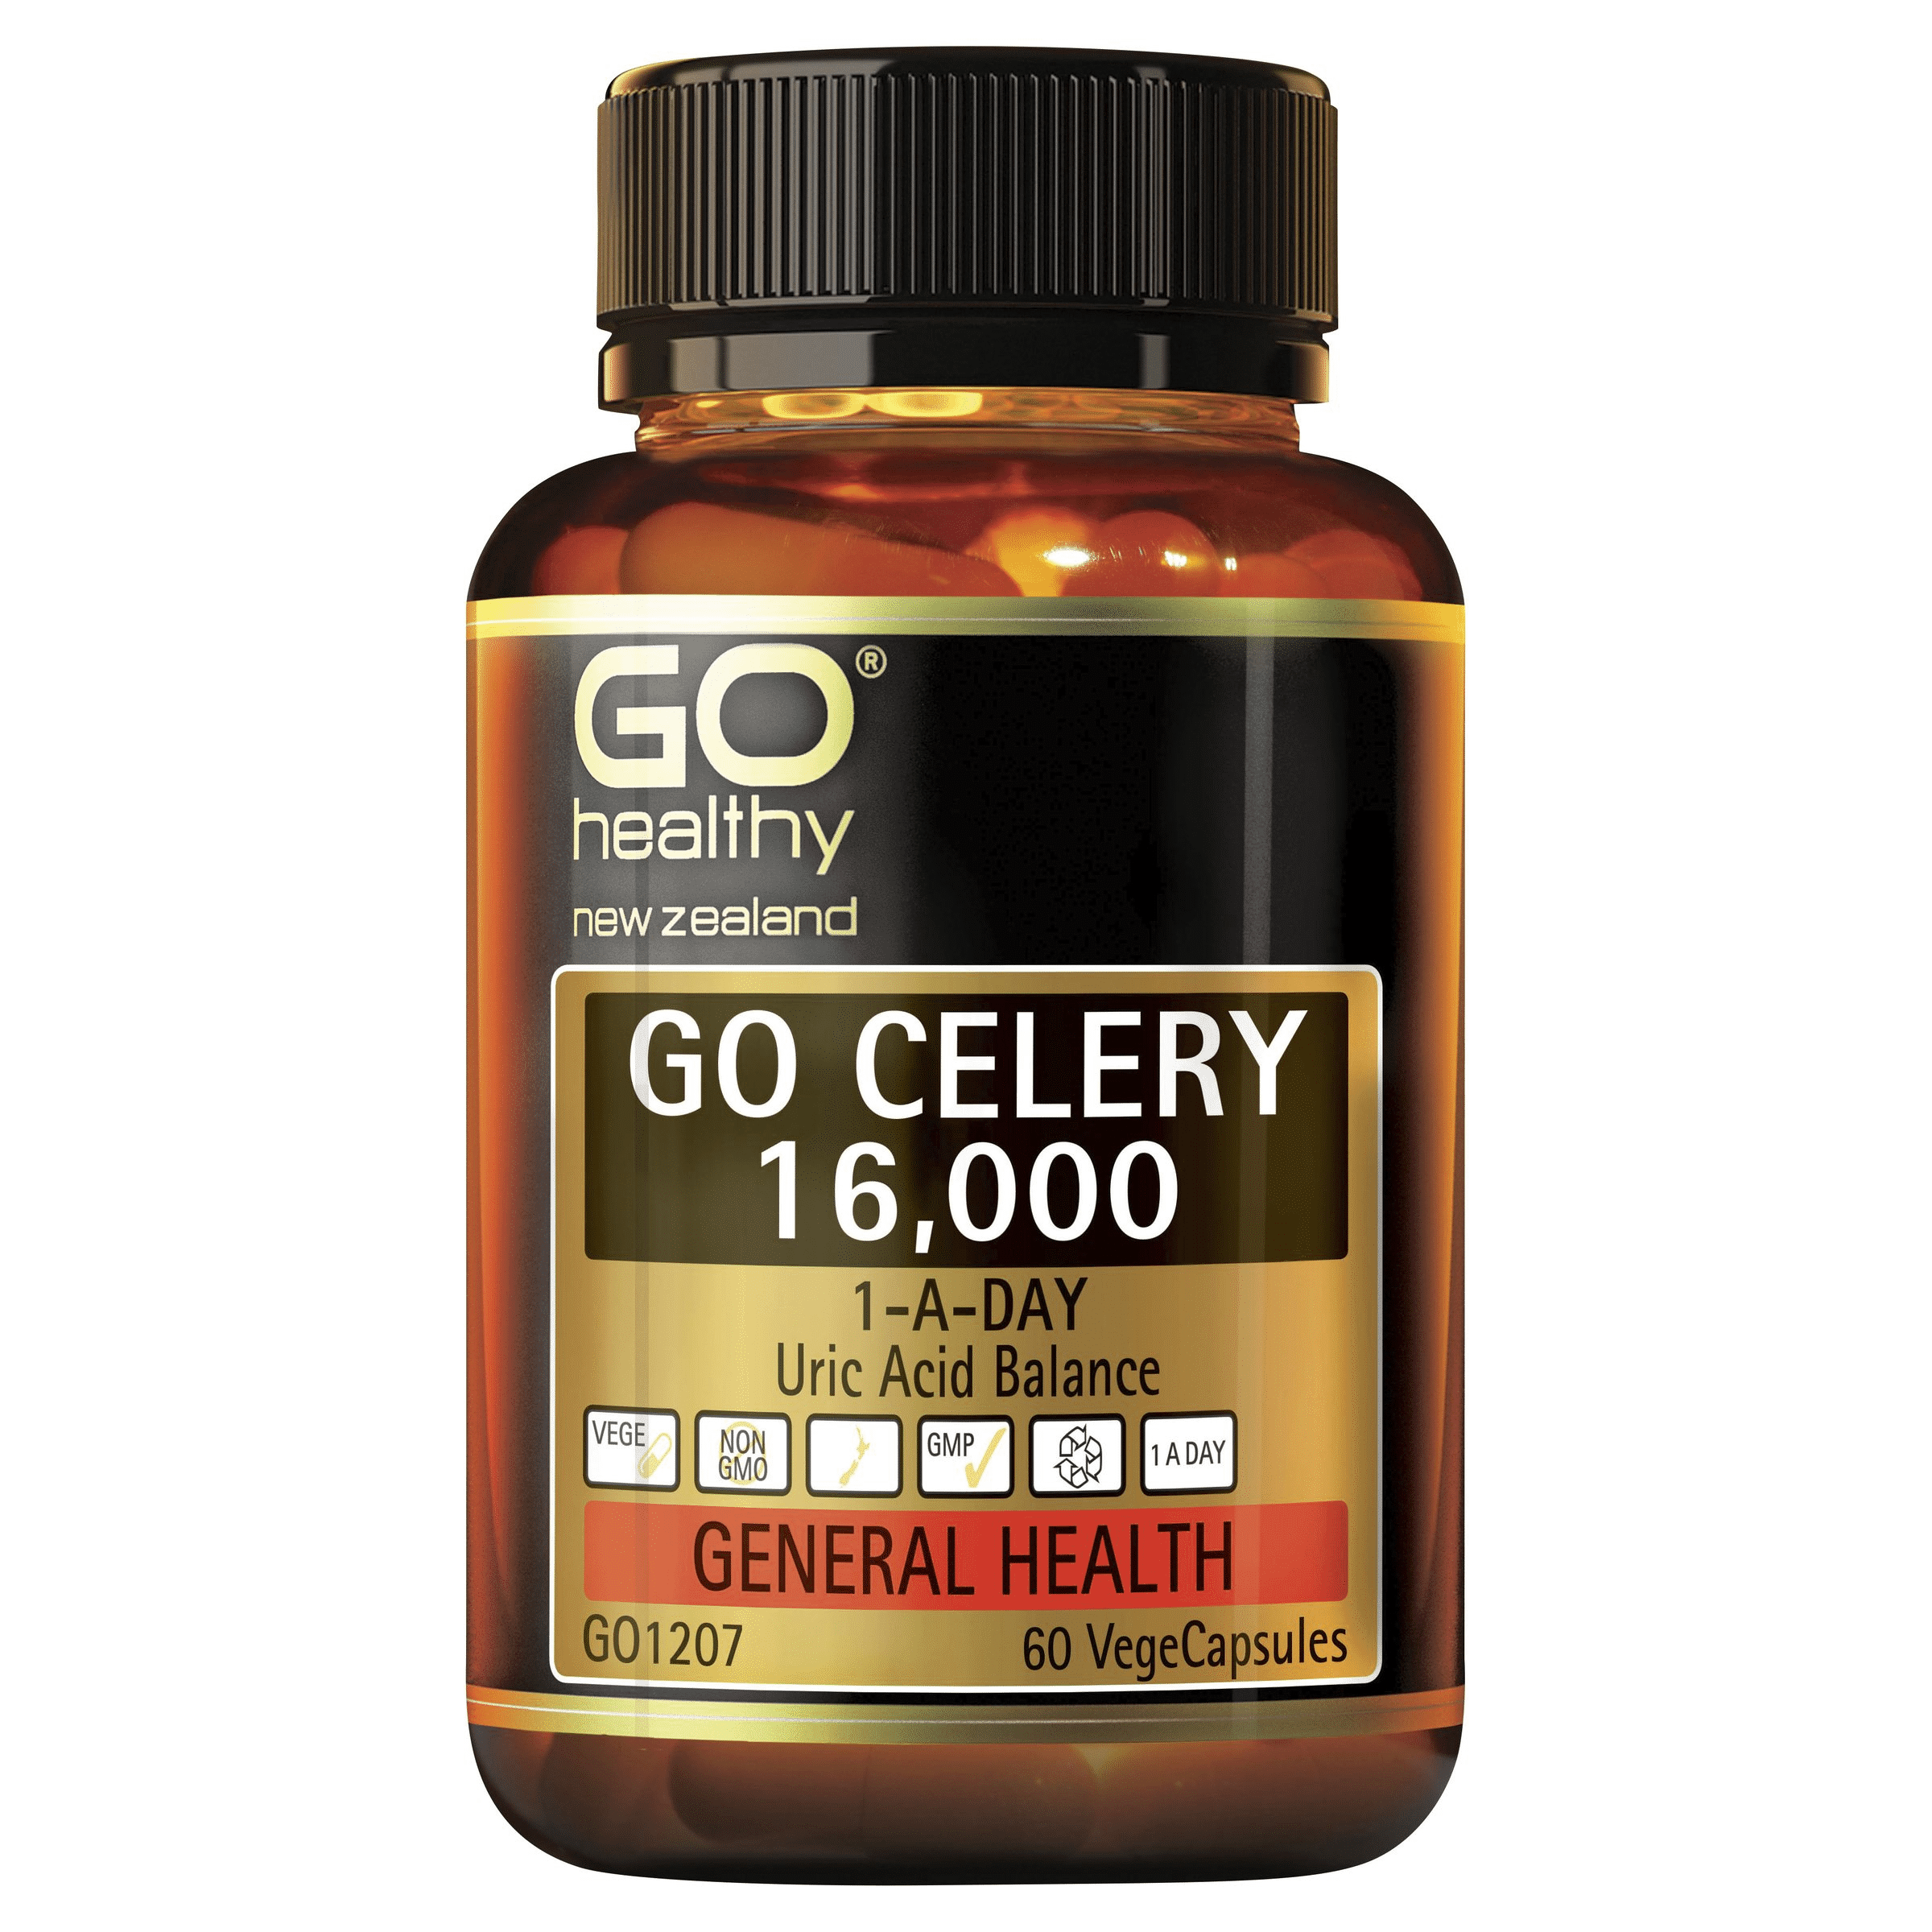 GO Celery 16,000 1-a-day, Uric Acid Balance